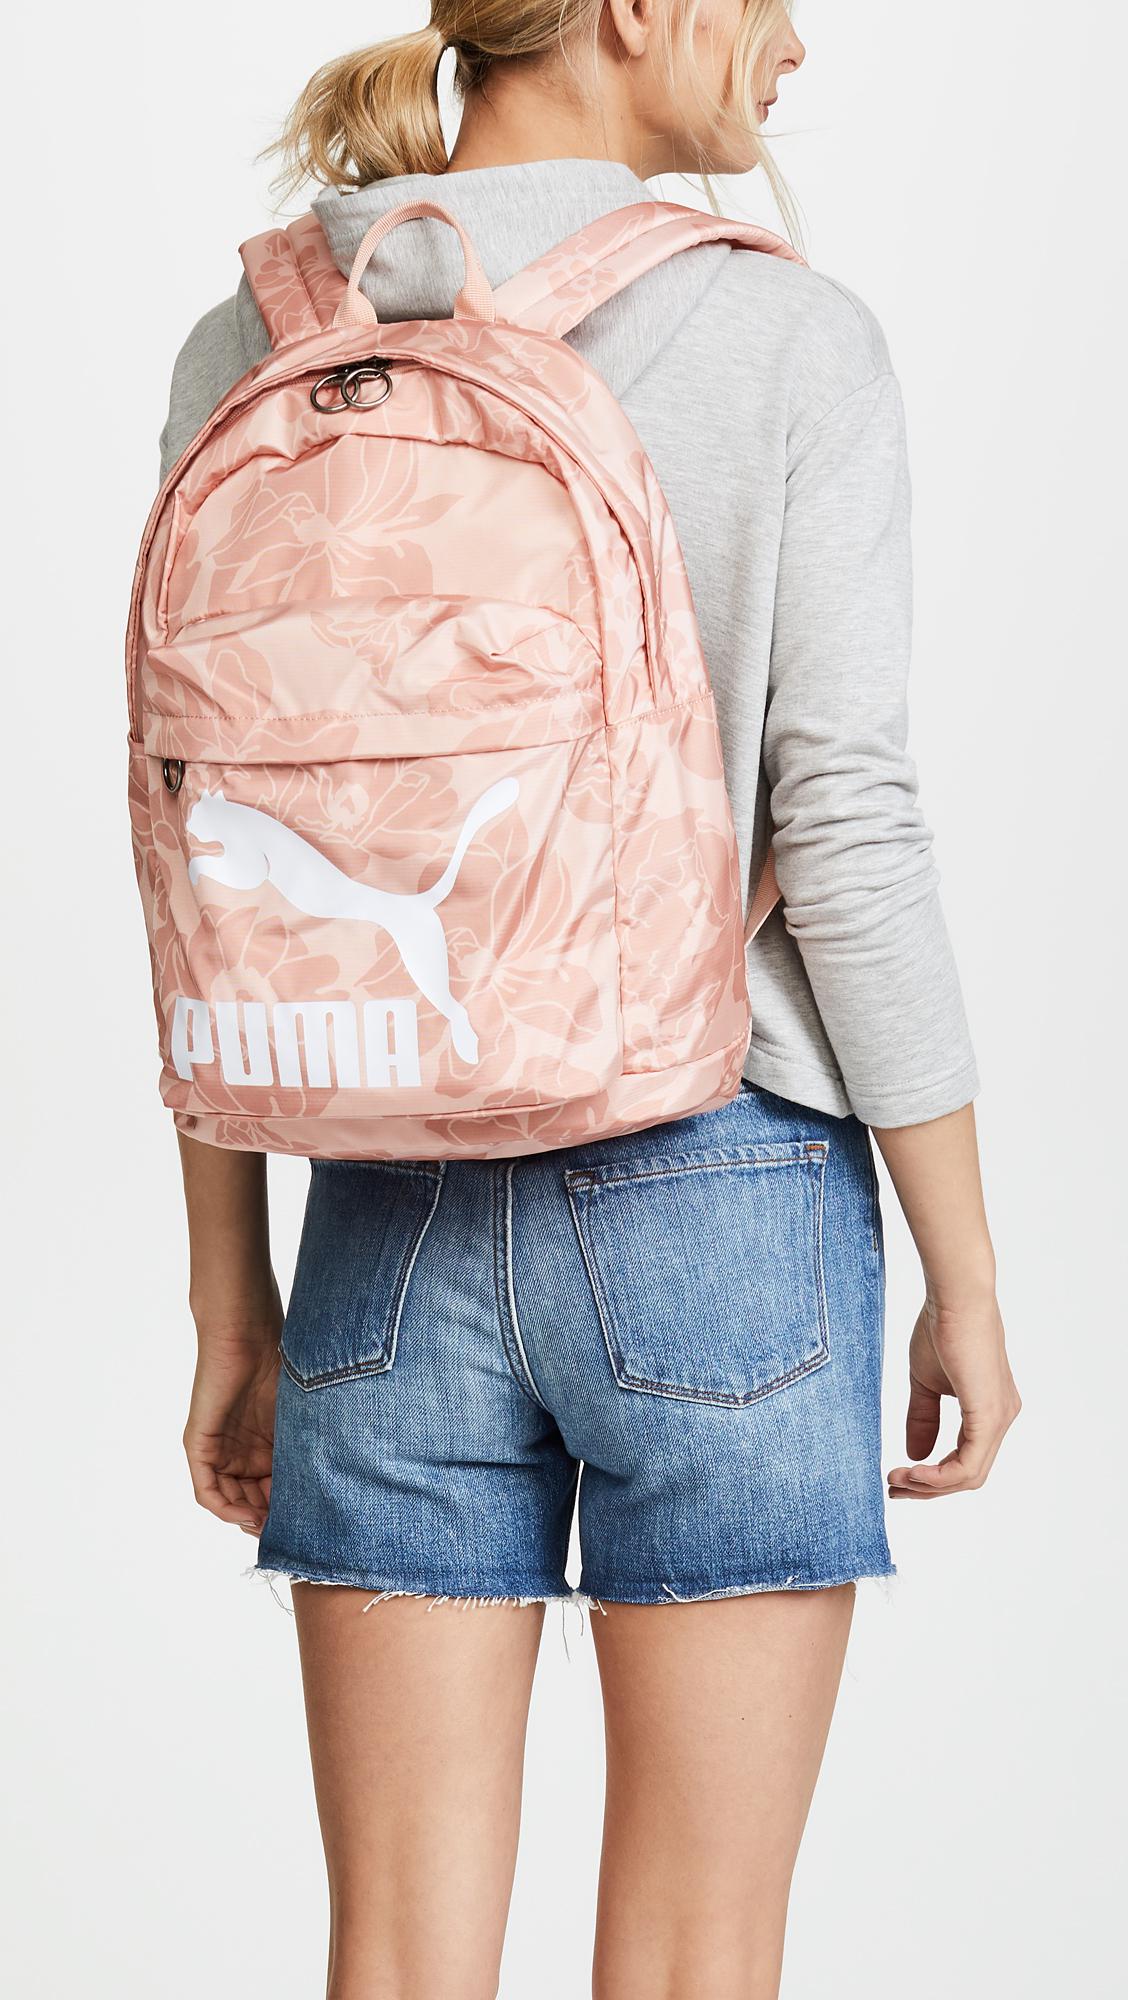 PUMA Originals Backpack in Pink | Lyst